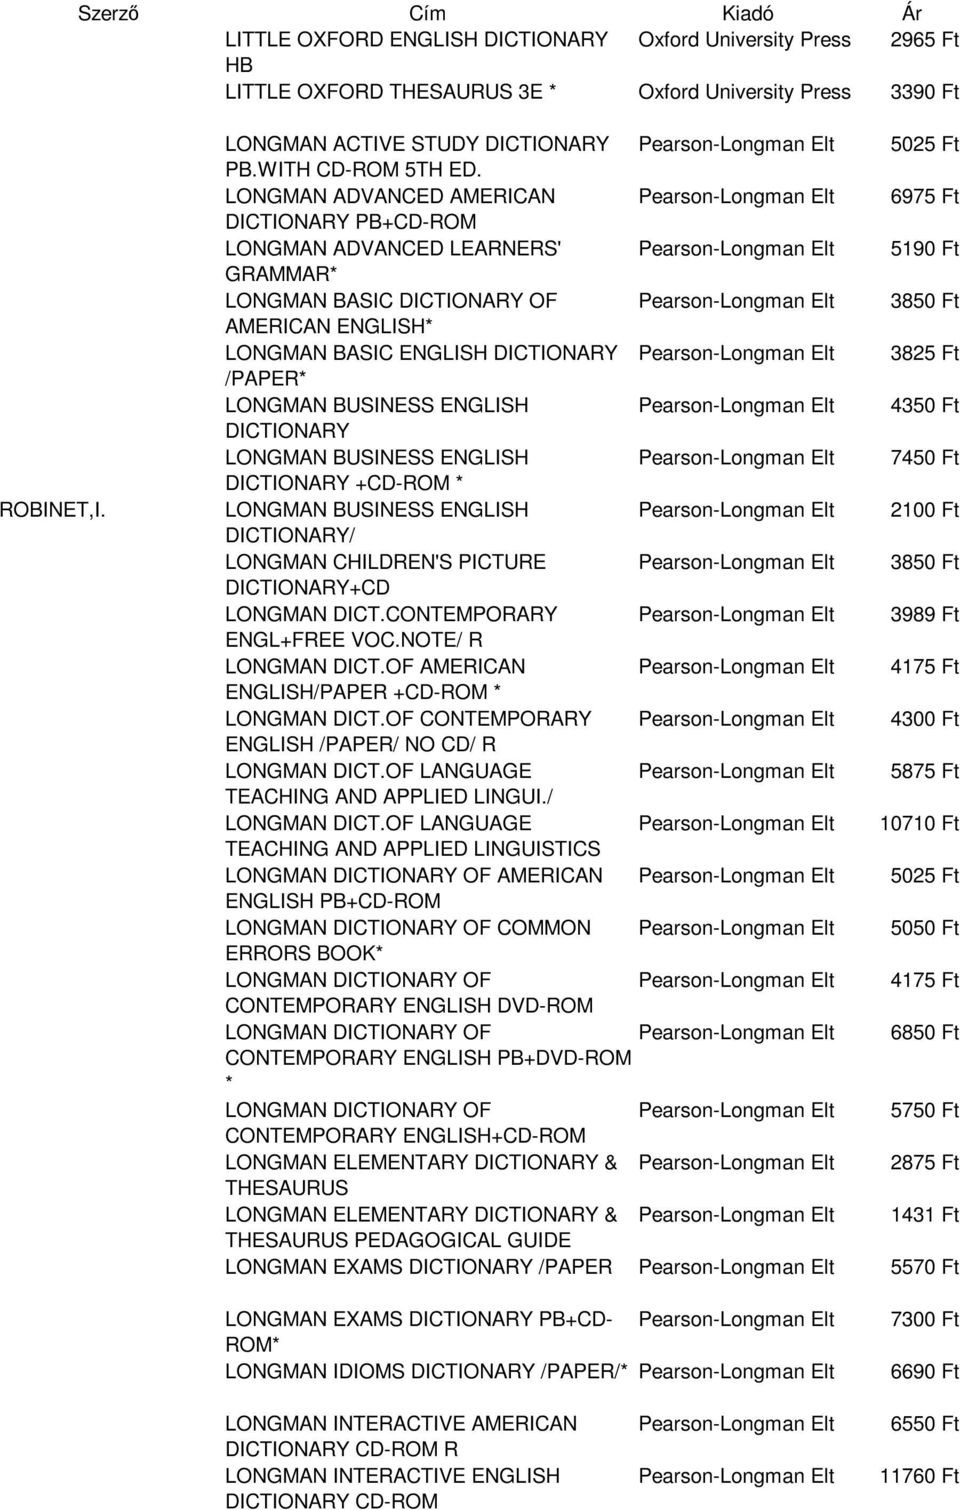 BASIC ENGLISH Pearson-Longman Elt 3825 Ft /PAPER* LONGMAN BUSINESS ENGLISH Pearson-Longman Elt 4350 Ft LONGMAN BUSINESS ENGLISH +CD-ROM * Pearson-Longman Elt 7450 Ft LONGMAN BUSINESS ENGLISH